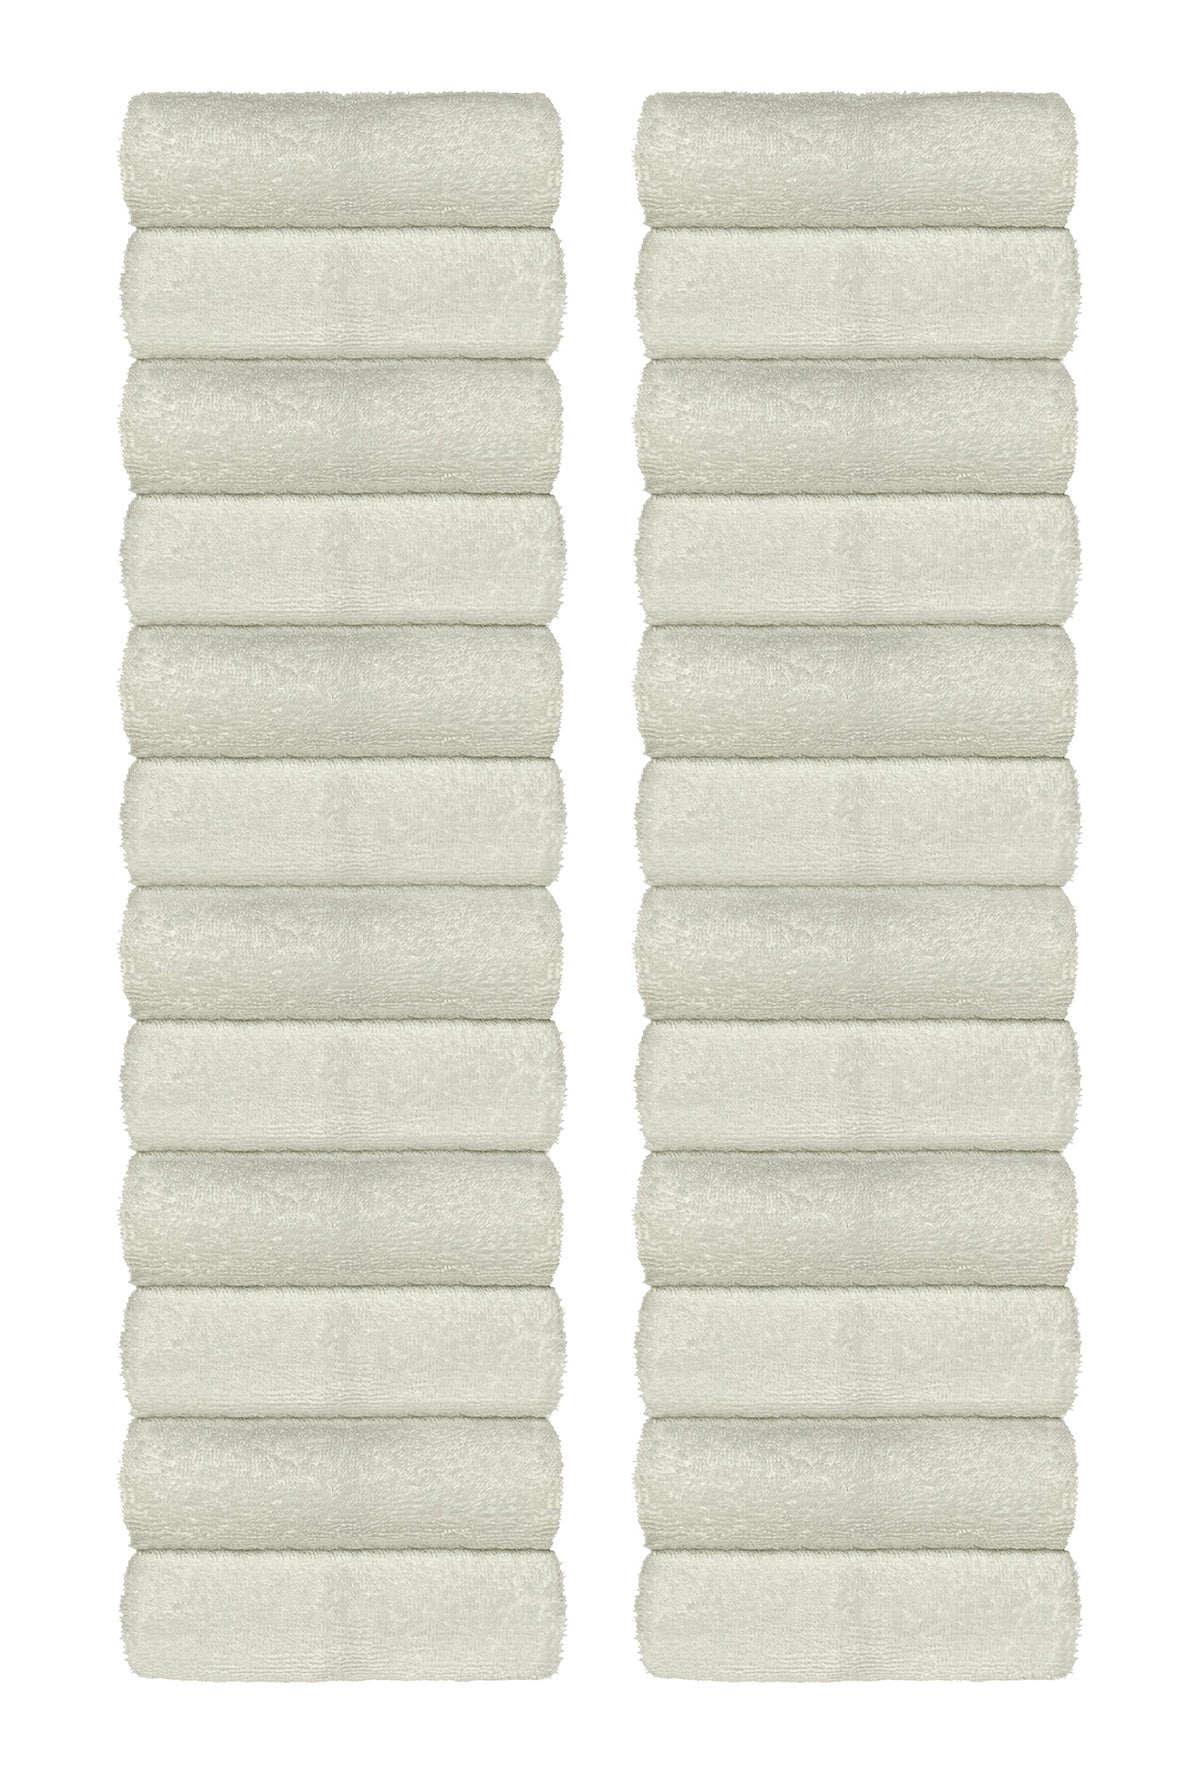 Set Asciugamani Bagno 100% Cotone Super Assorbenti Telo Doccia Spugna Professionali Salvietta Lavetta Viso Asciugamano Teli Asciugamano-Natural